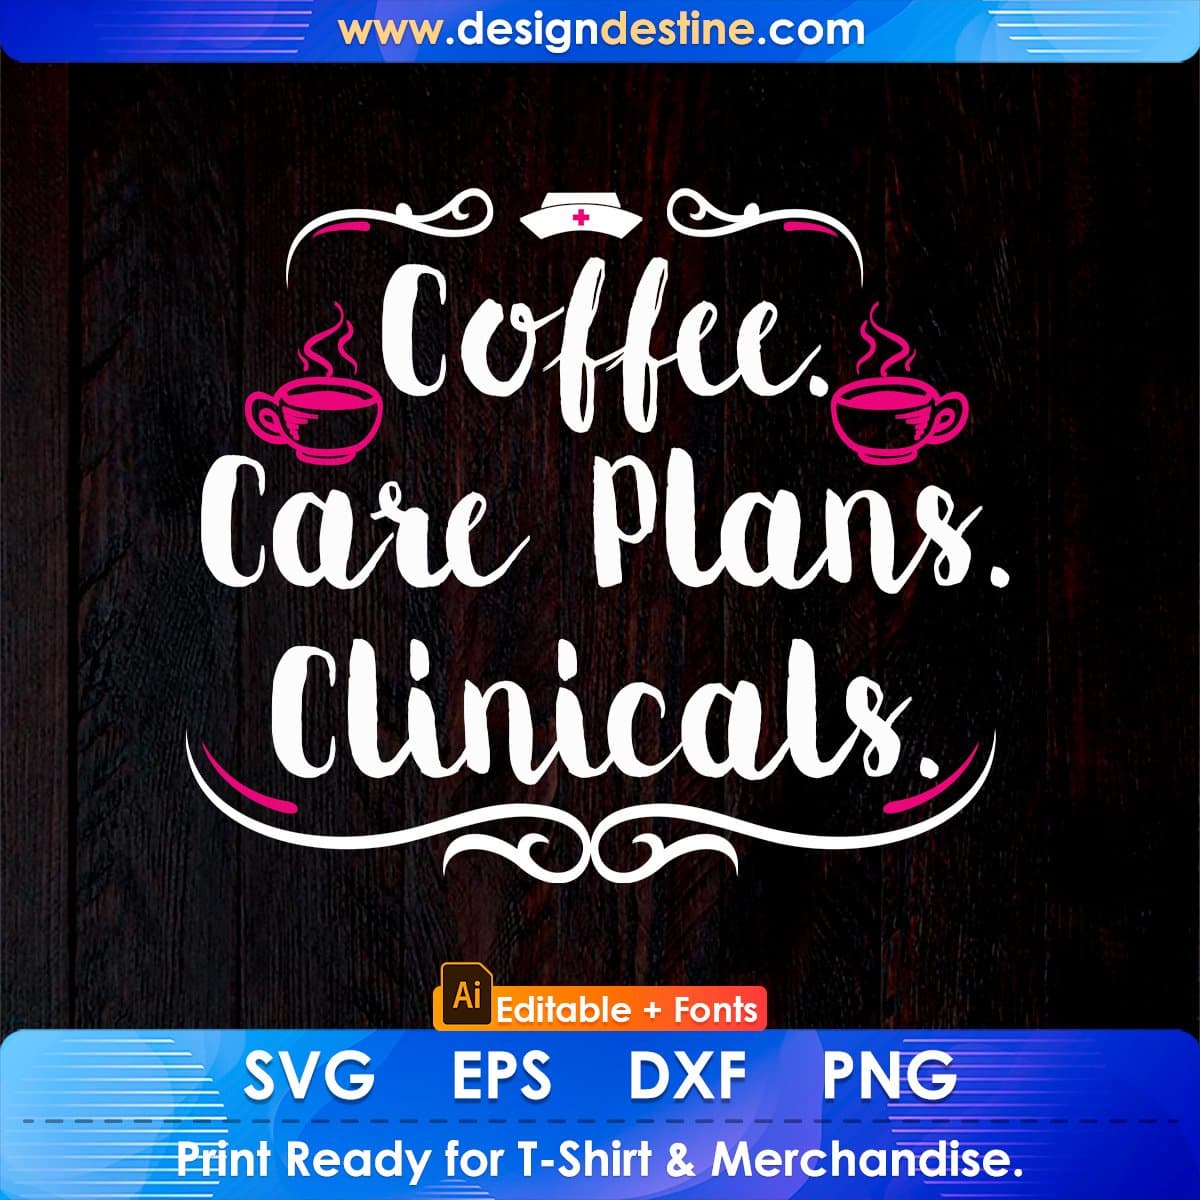 Coffee Care Plans Clinicals Nursing Gift Ideas Nurse Editable T shirt Design In Ai Svg Files